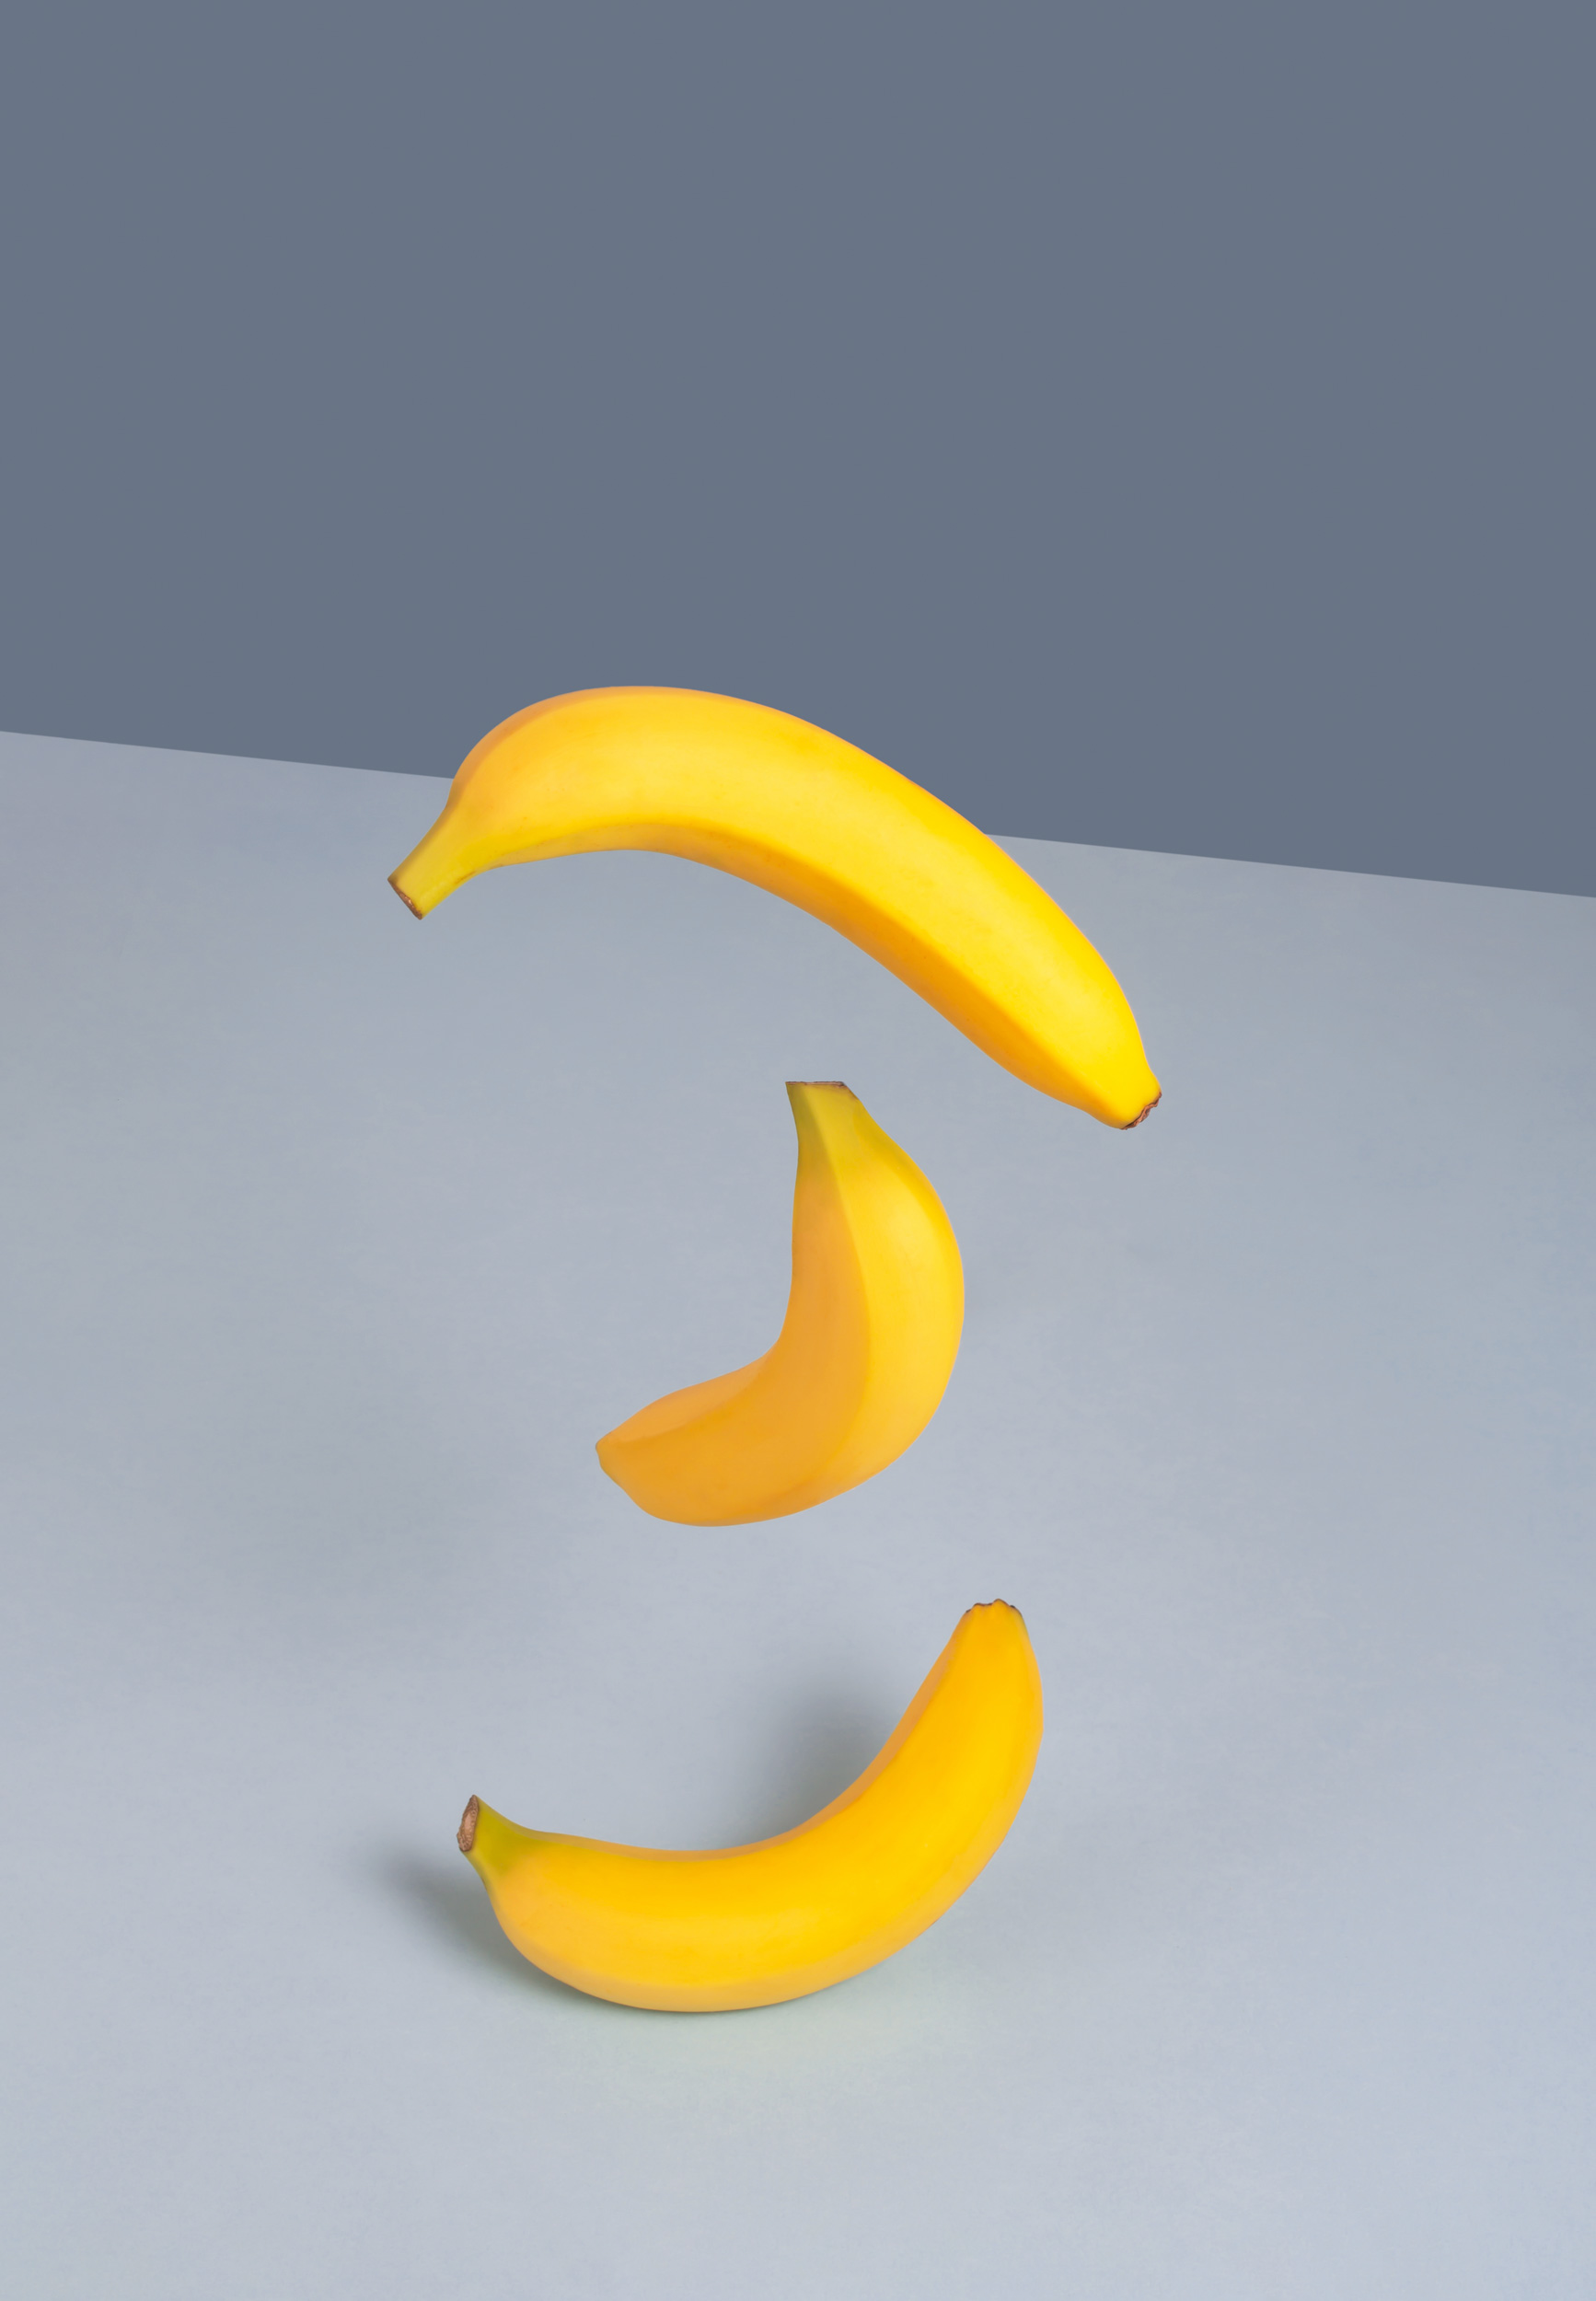 yellow-bananas-on-a-blue-background-minimalistic-2021-08-30-00-04-41-utc